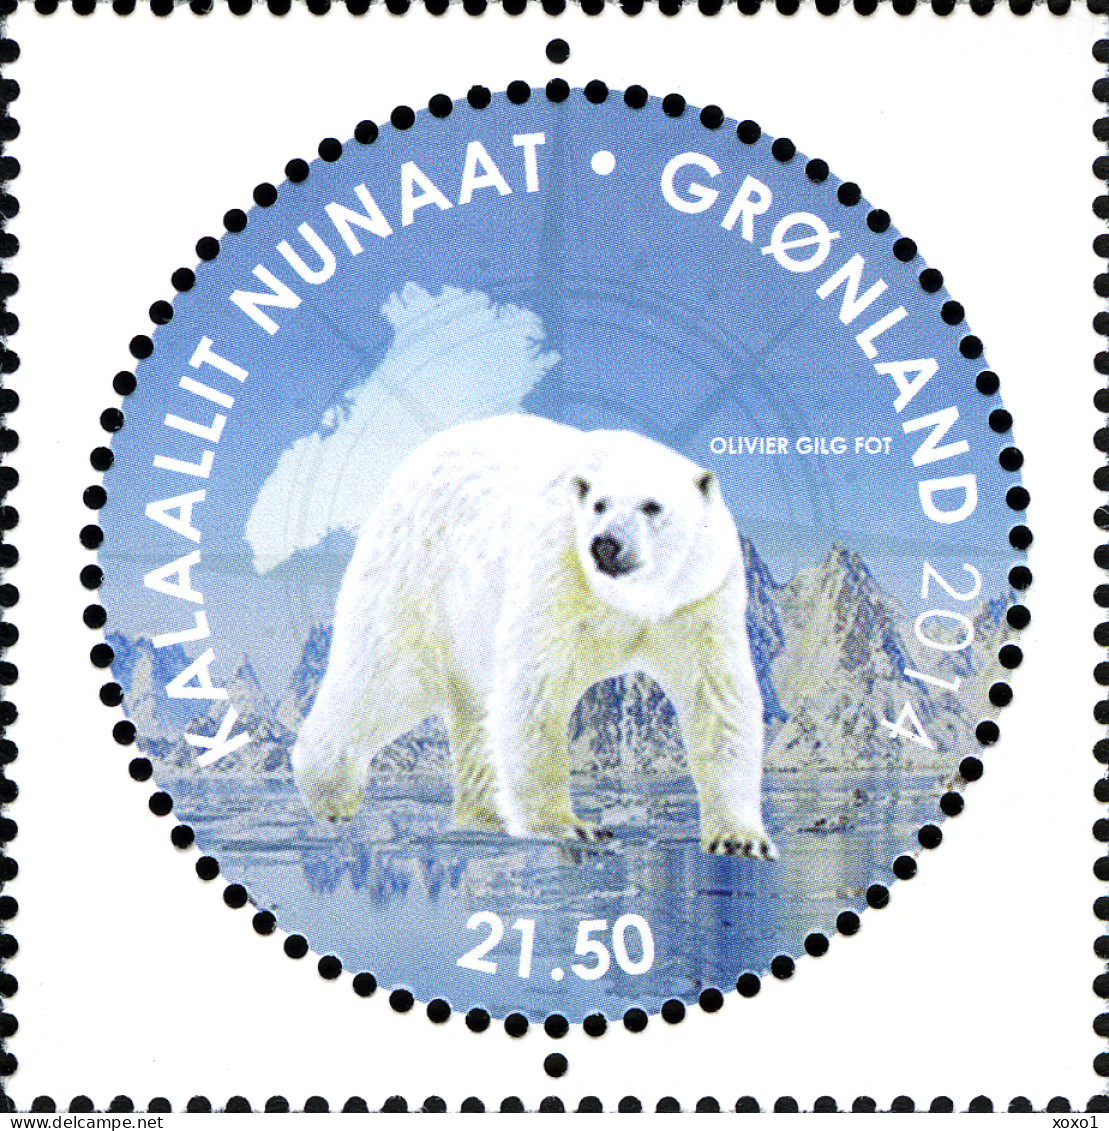 Greenland 2014 MiNr. 680 (Block 70) Dänemark Grönland Ross Antarctica Pole Bears BIRDS Penguins 1v + S\sh MNH** 13.00 € - Fauna ártica